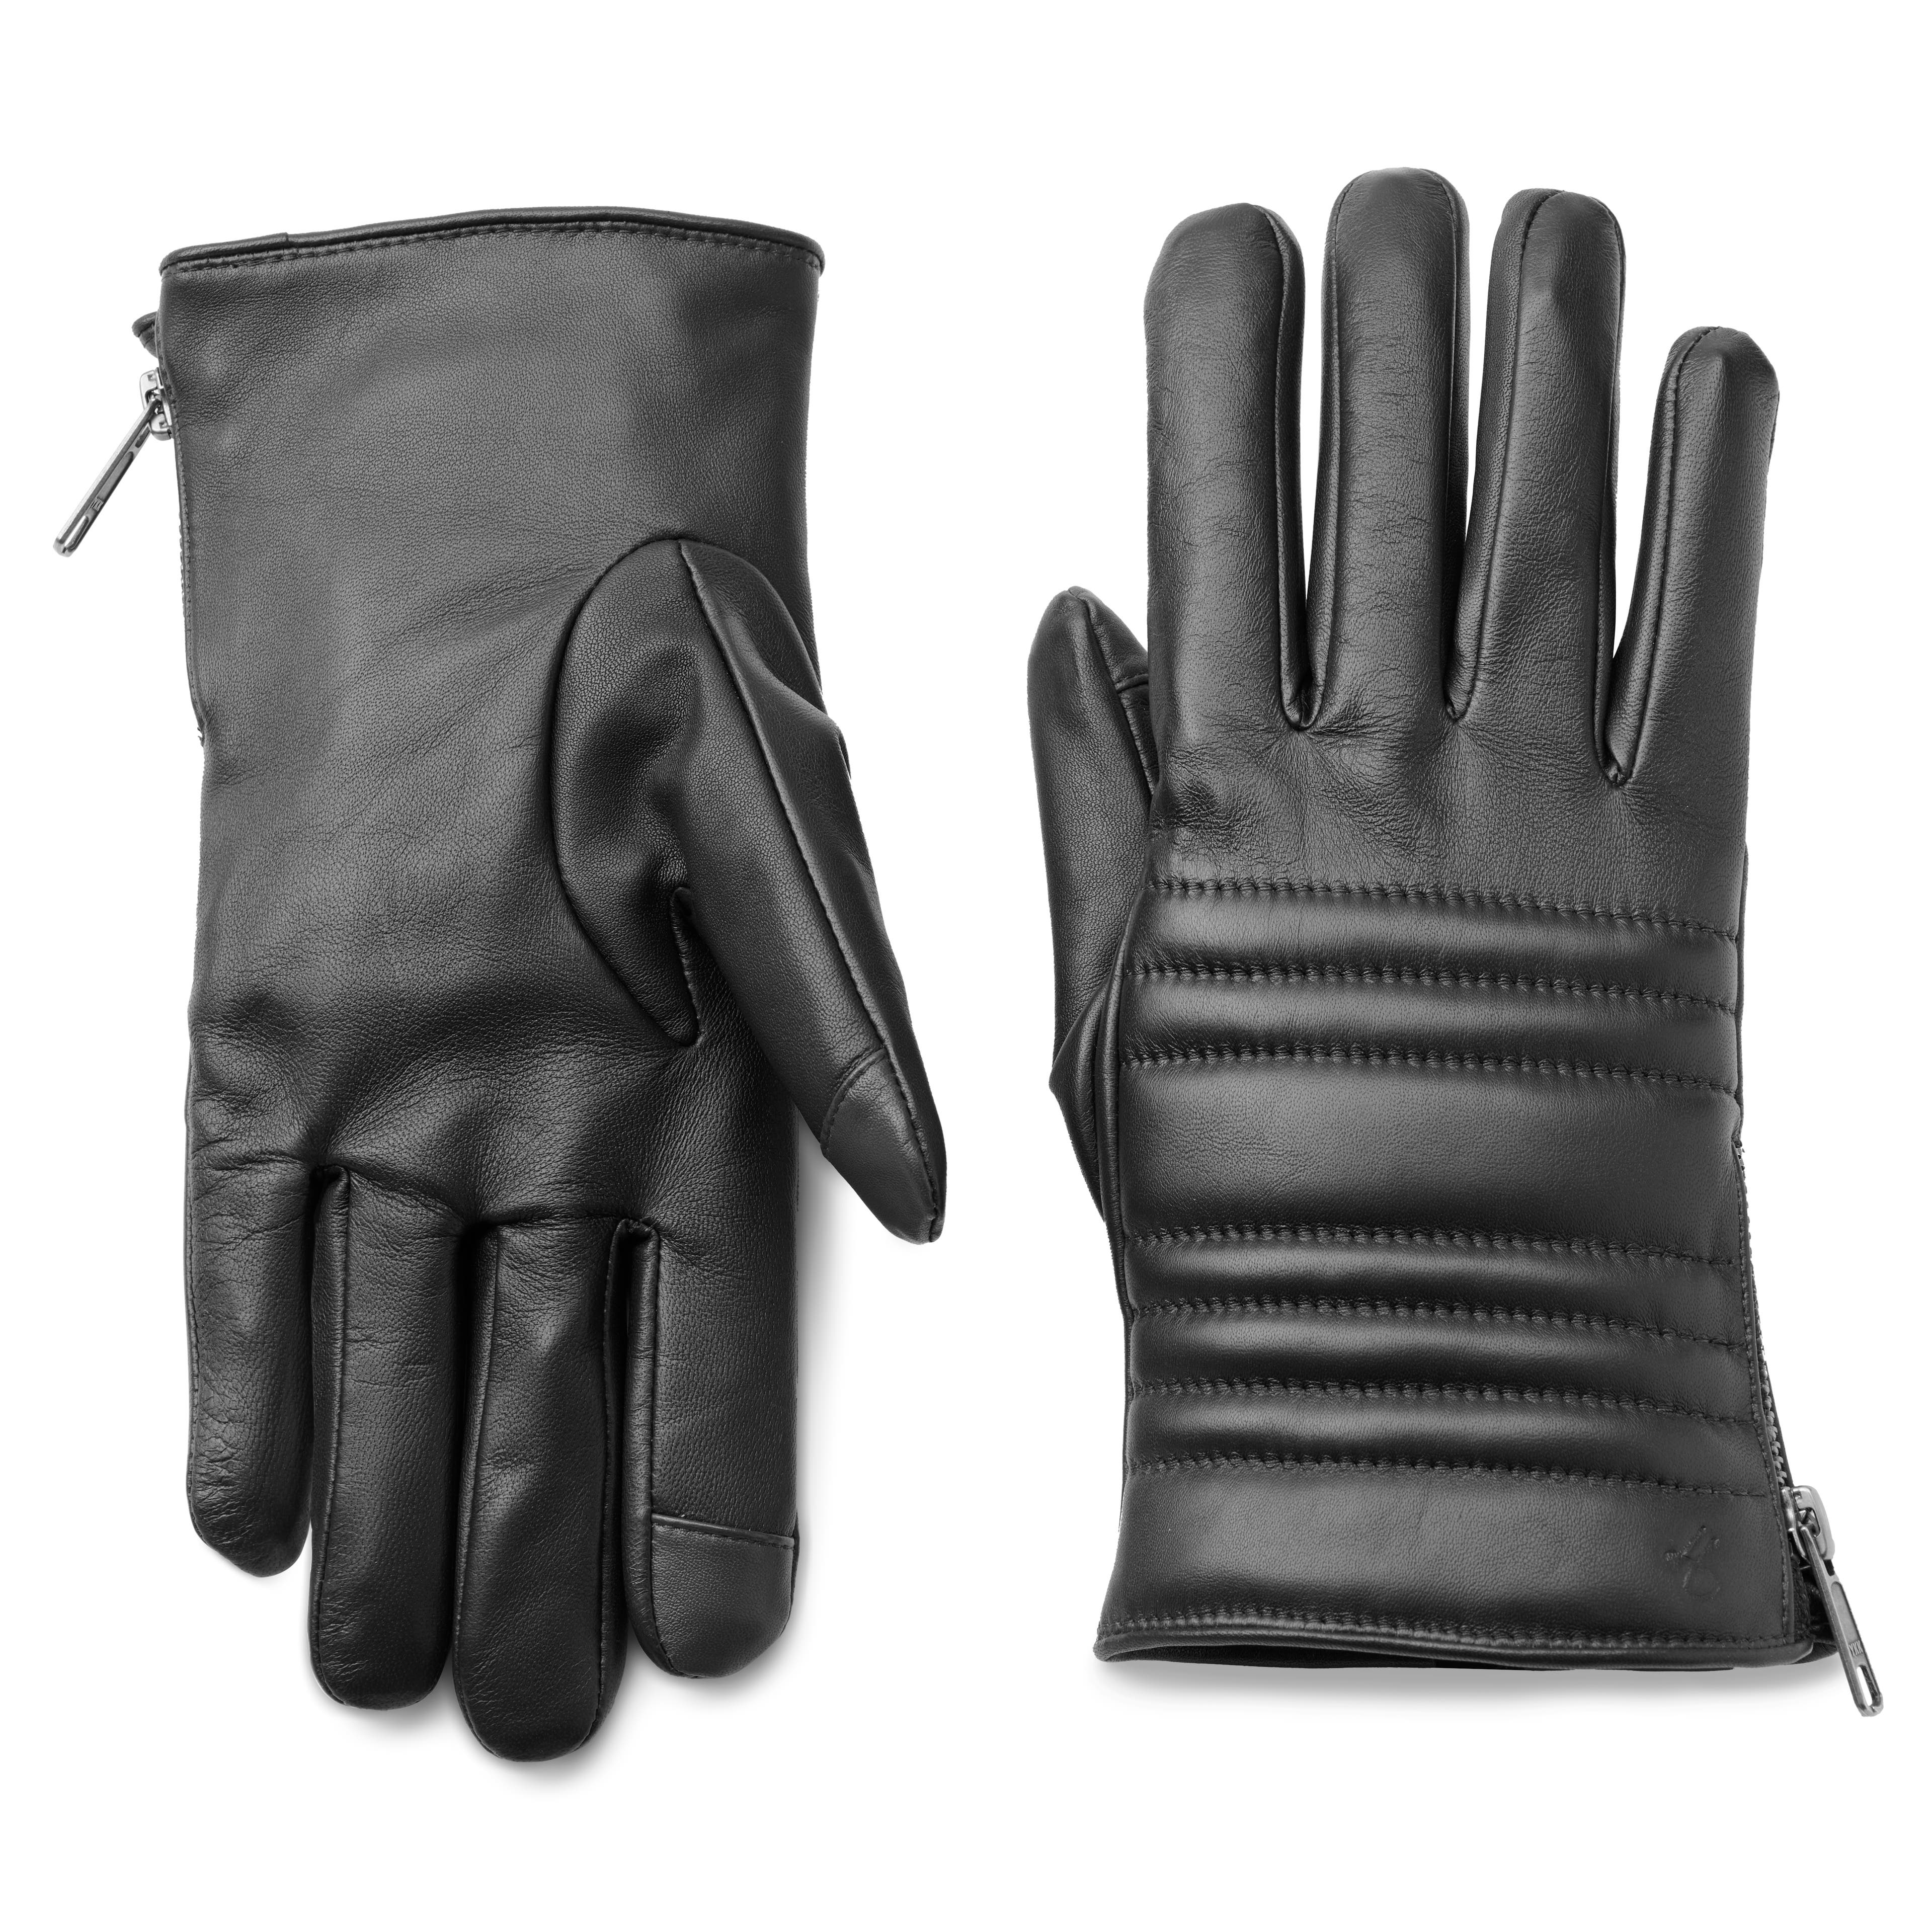 Čierne rebrované kožené rukavice kompatibilné s dotykovou obrazovkou